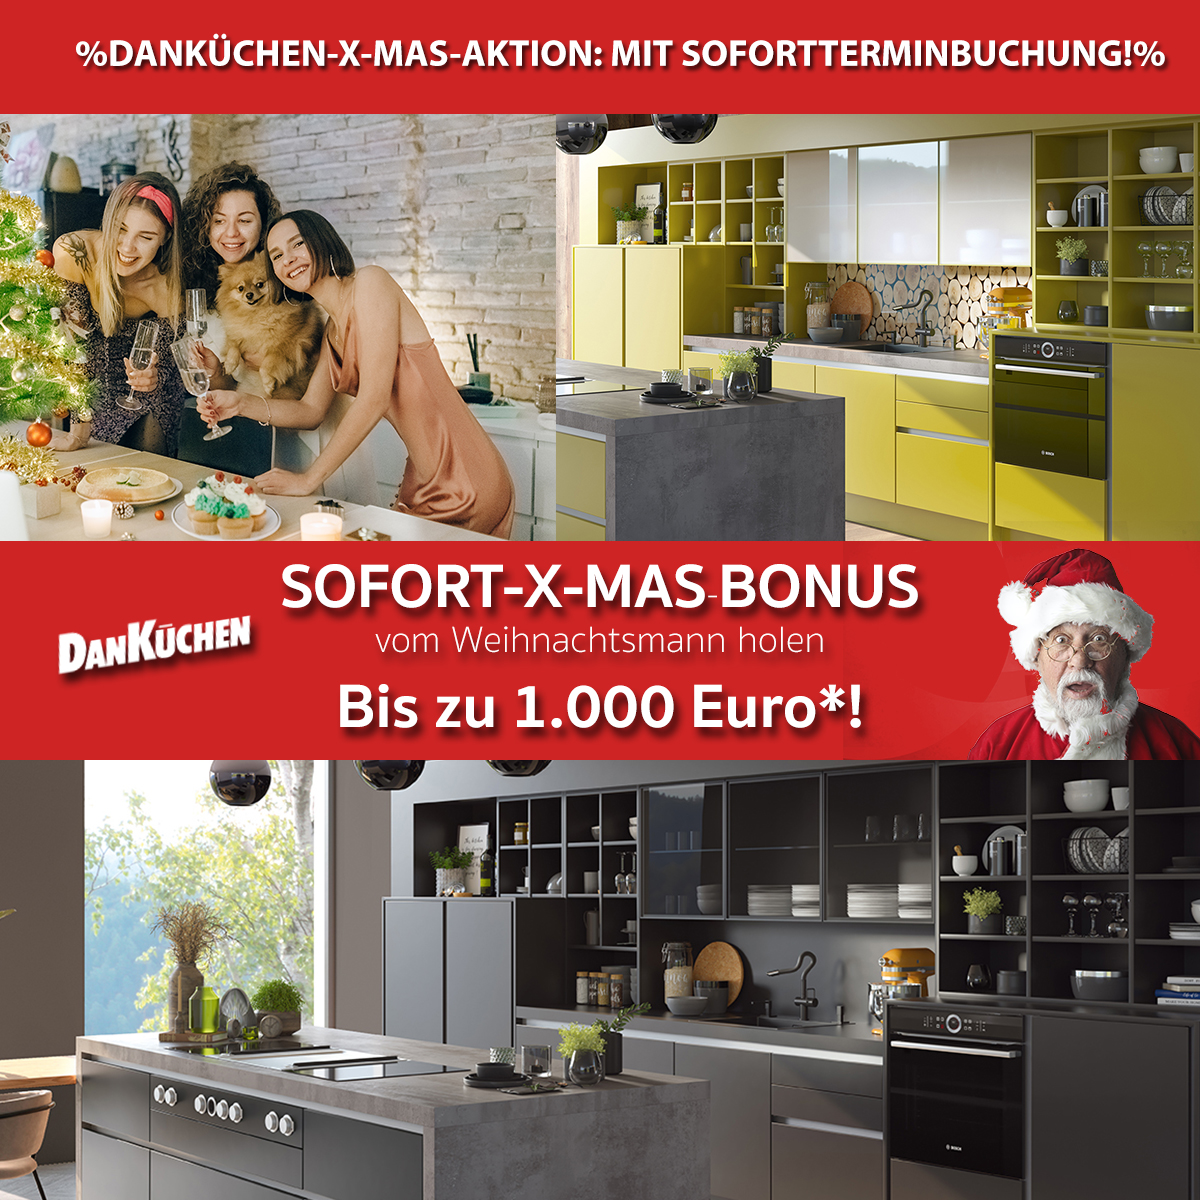 rodrix-dan-kuechen-fb-kampagne-soforttermin-x-mas-1000-euro